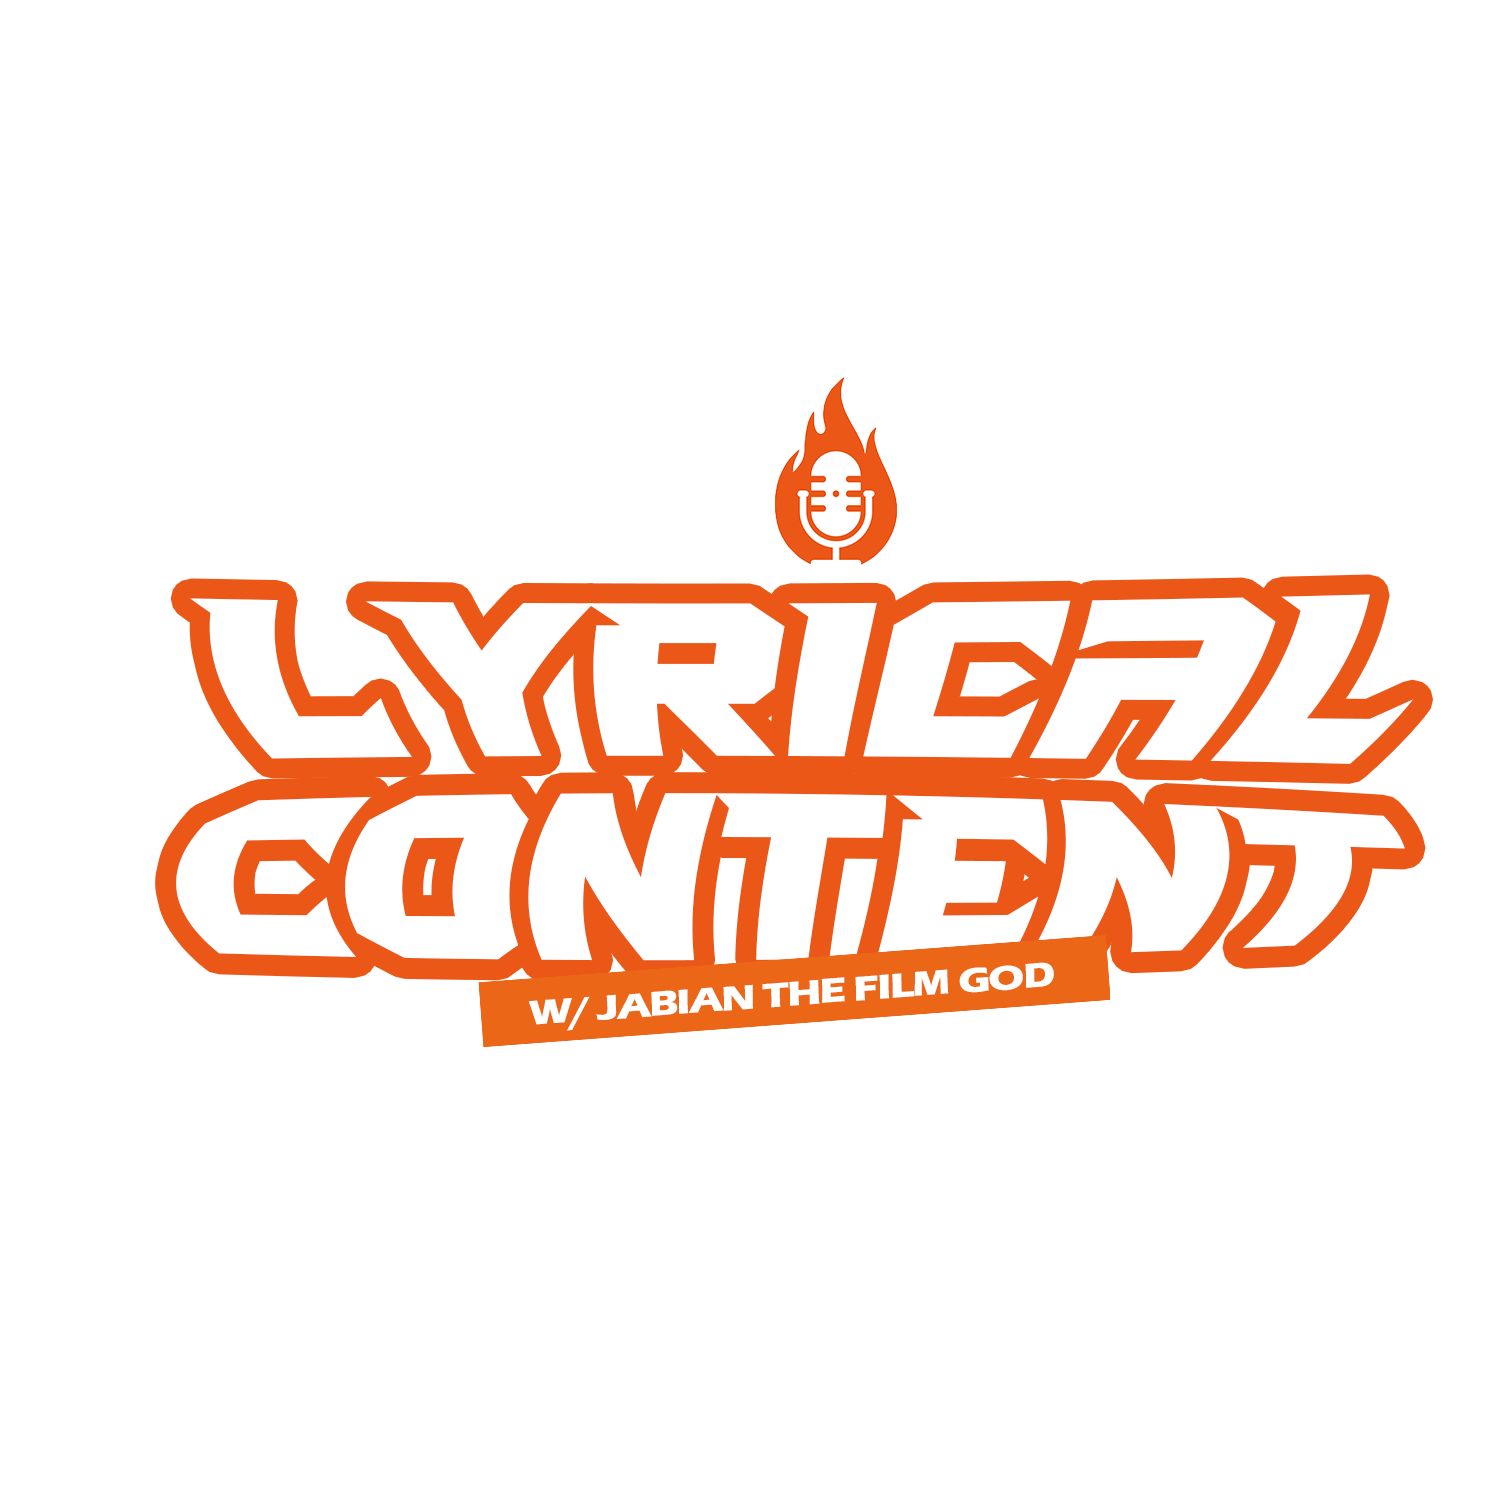 Lyrical Content Podcast